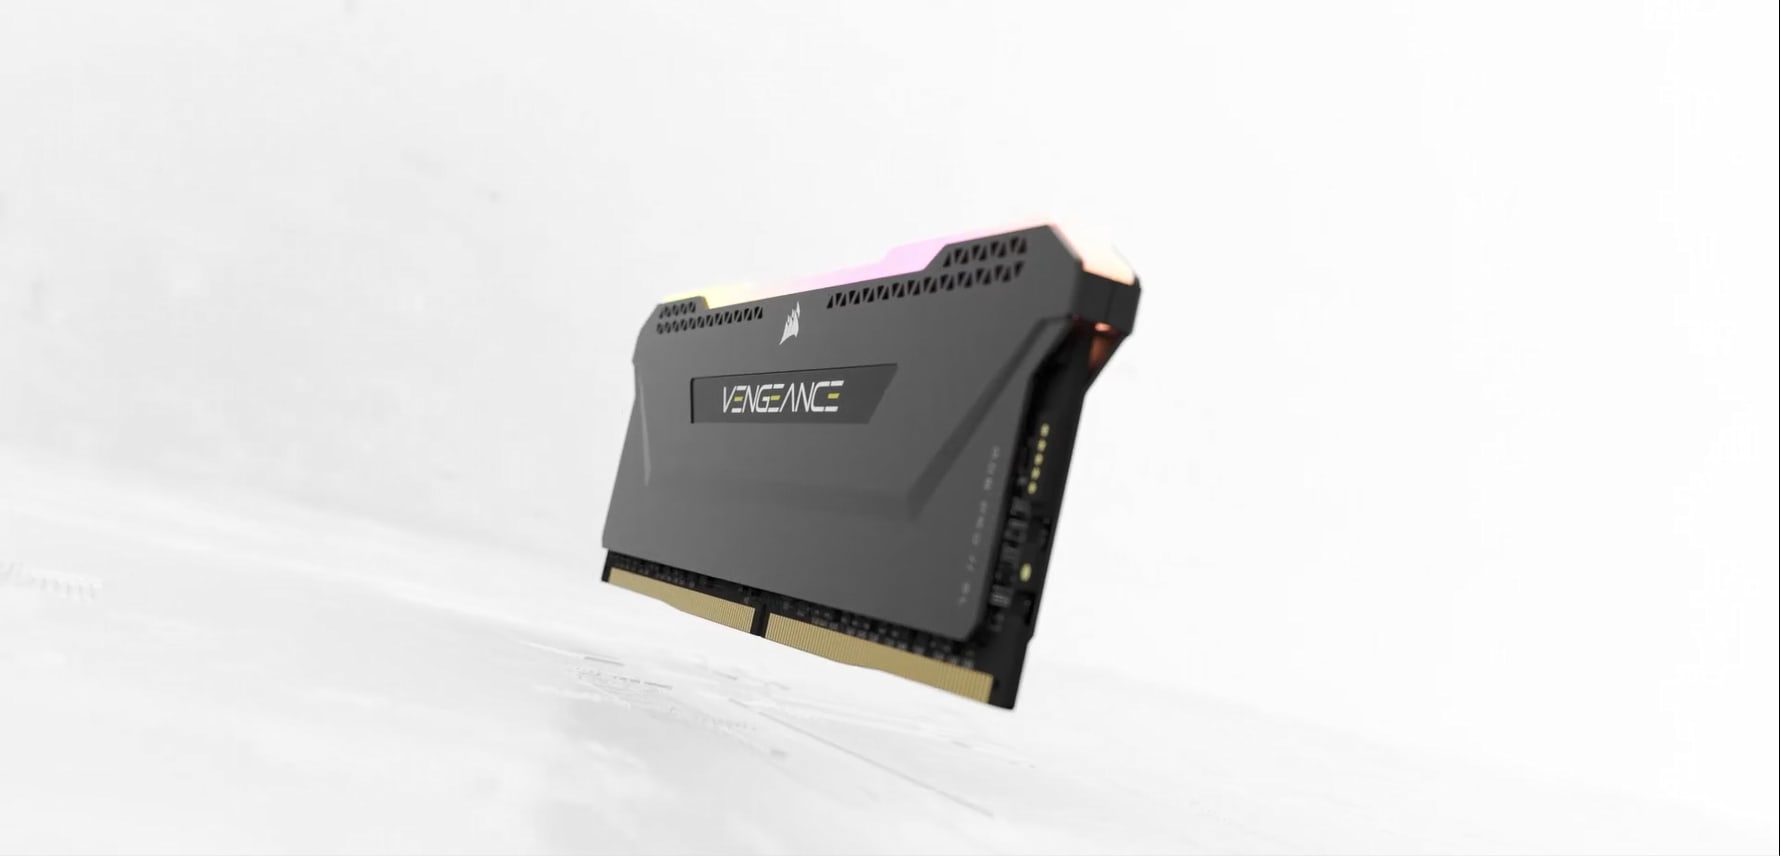 VENGEANCE® RGB RT 64GB (4 x 16GB) DDR4 DRAM 3600MHz C18 Memory Kit 